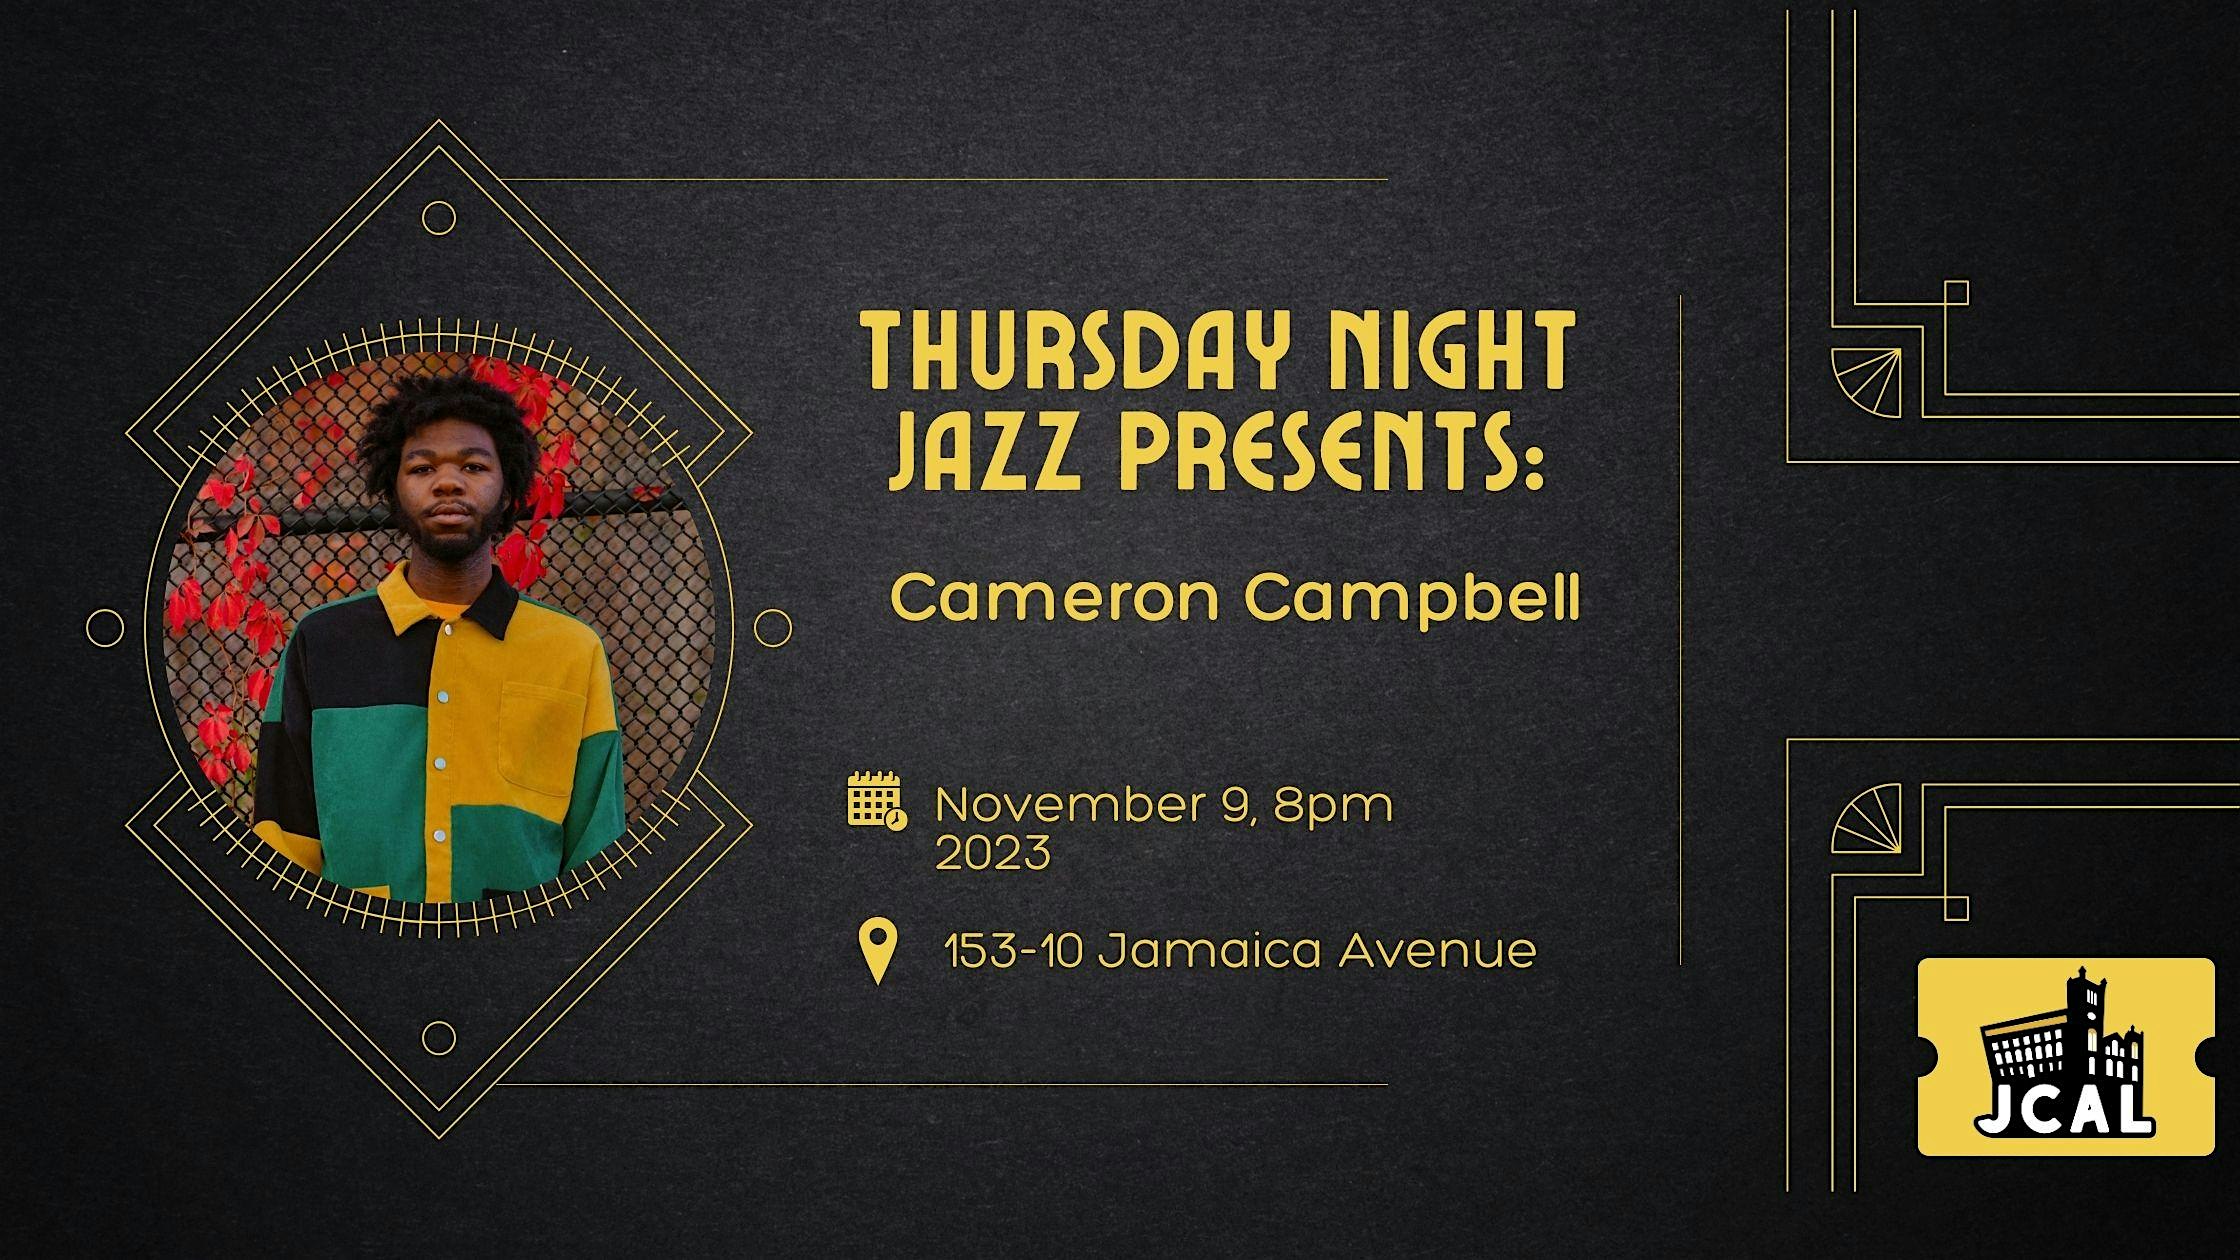 Thursday Night Jazz Presents: Cameron Campbell